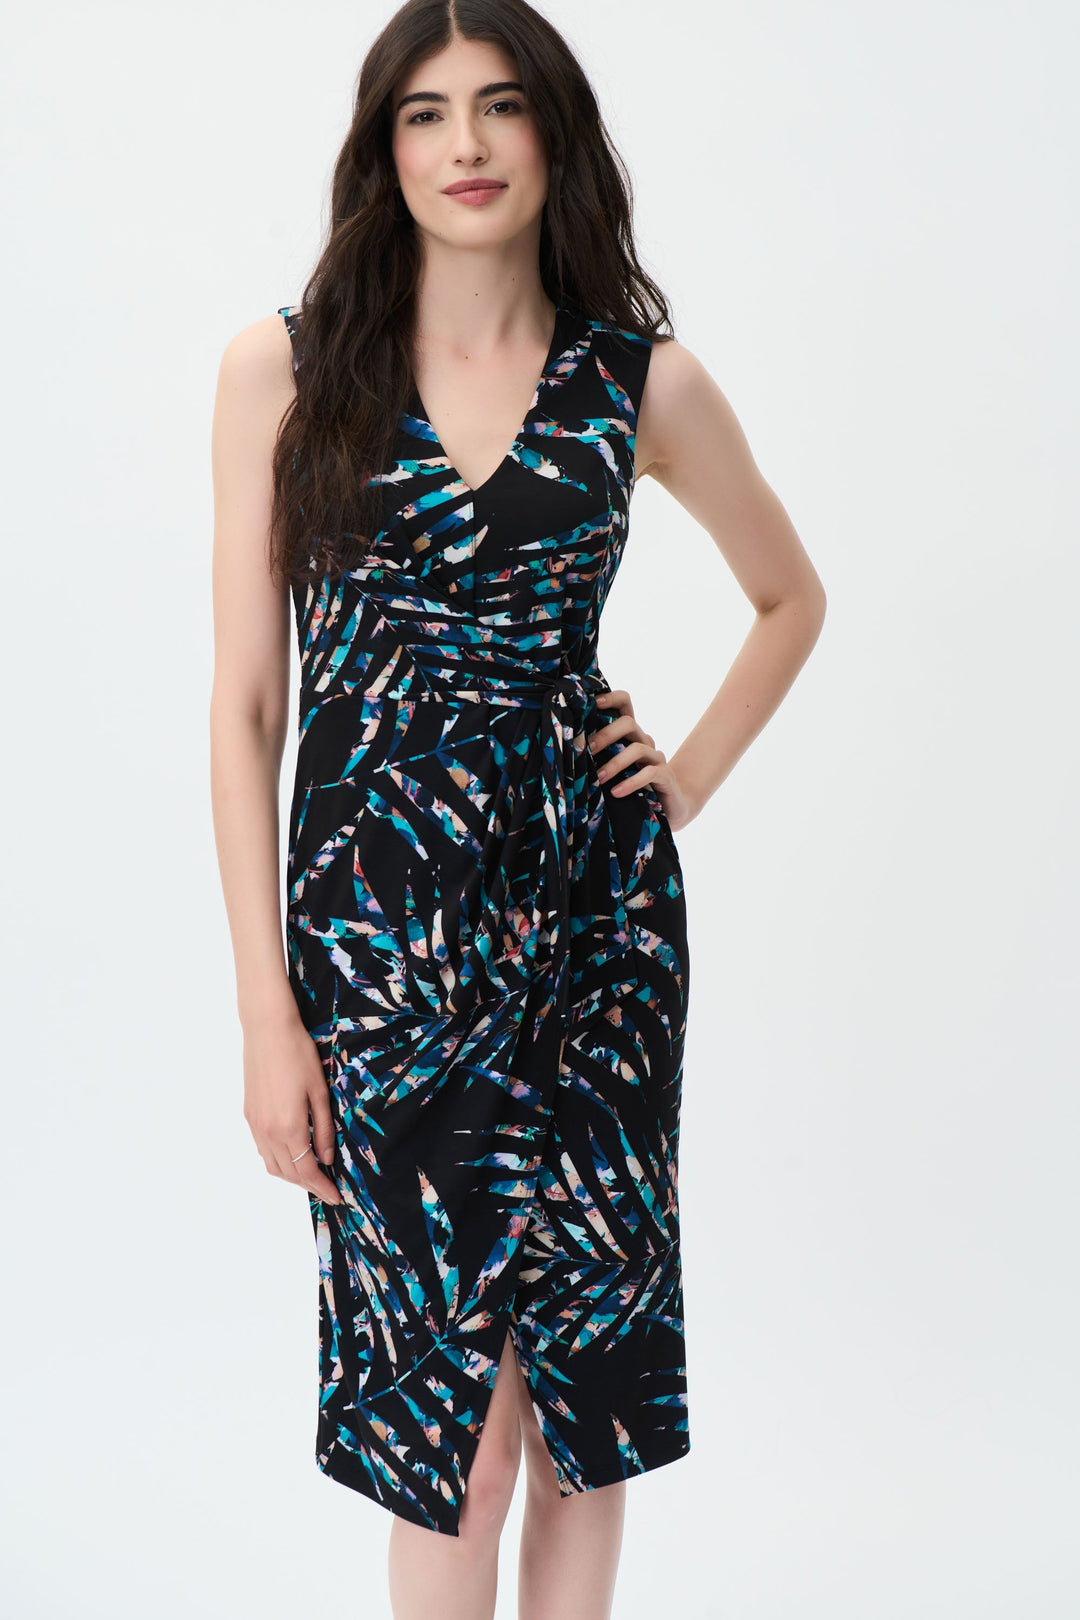 Joseph Ribkoff Dress Style 231048